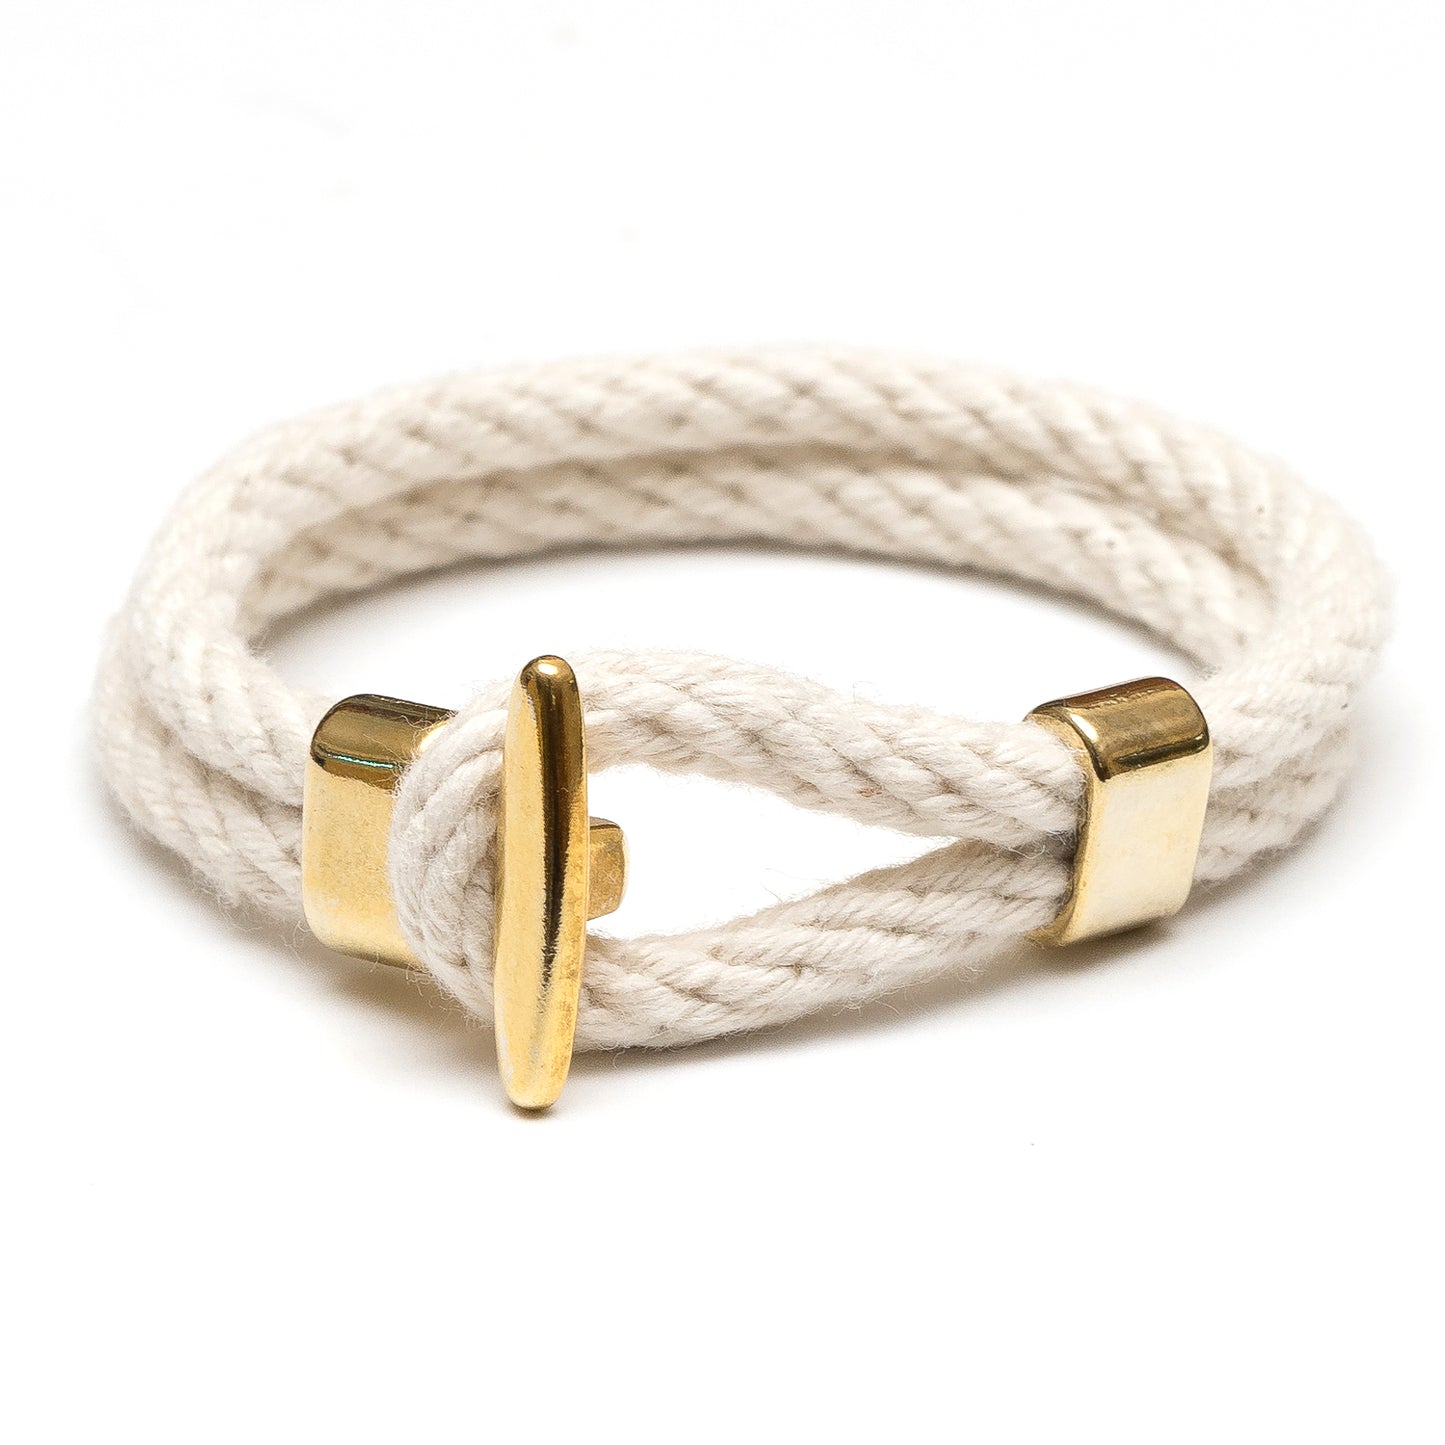 Nautical Ivory Rope Bracelet with Gold Closure